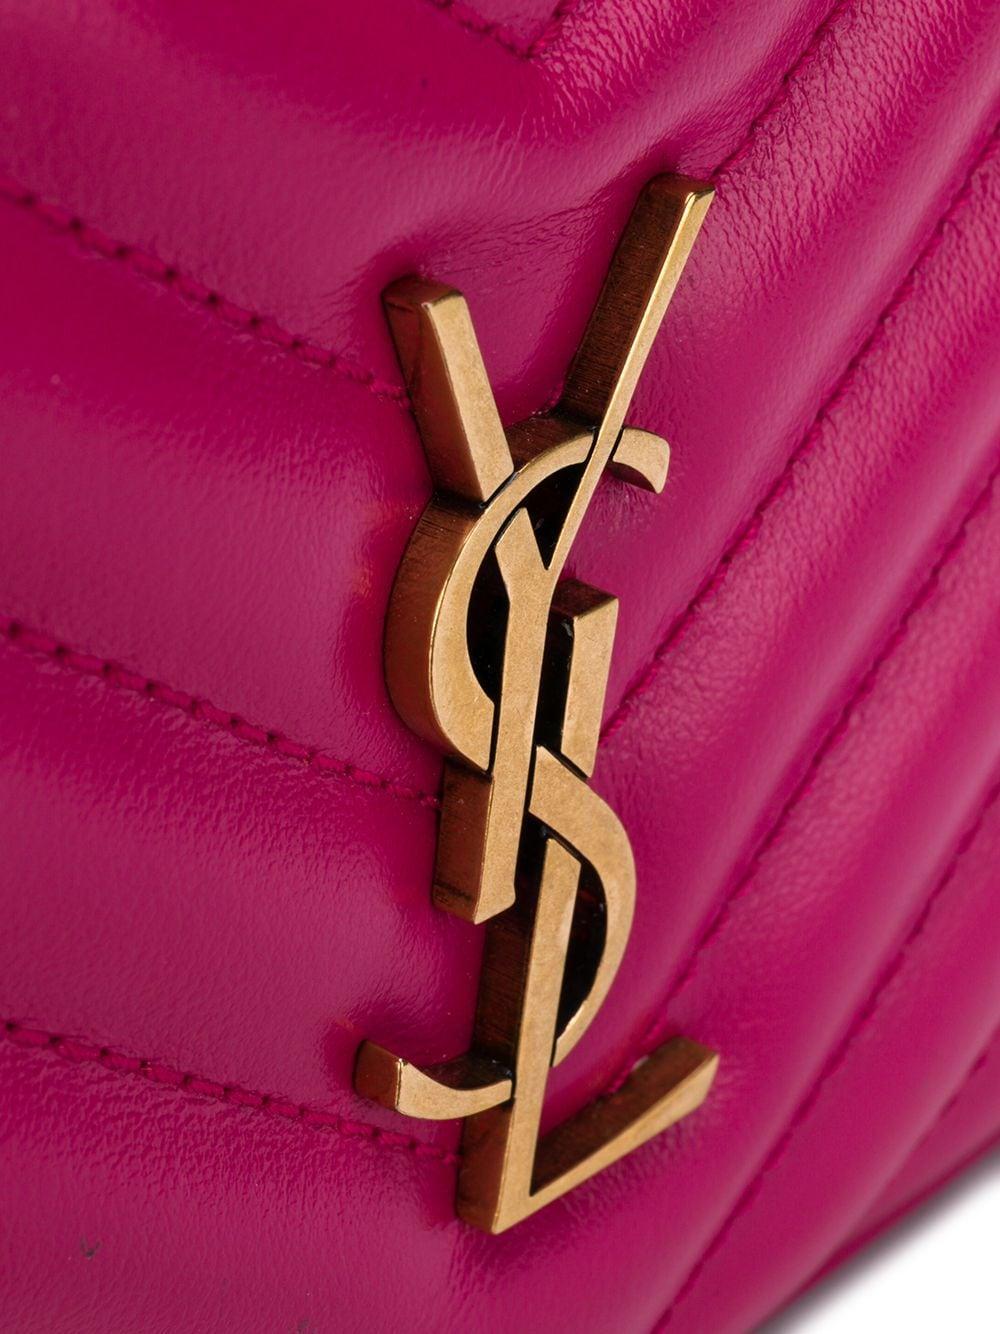 Saint Laurent Lou Leather Belt Bag in Pink